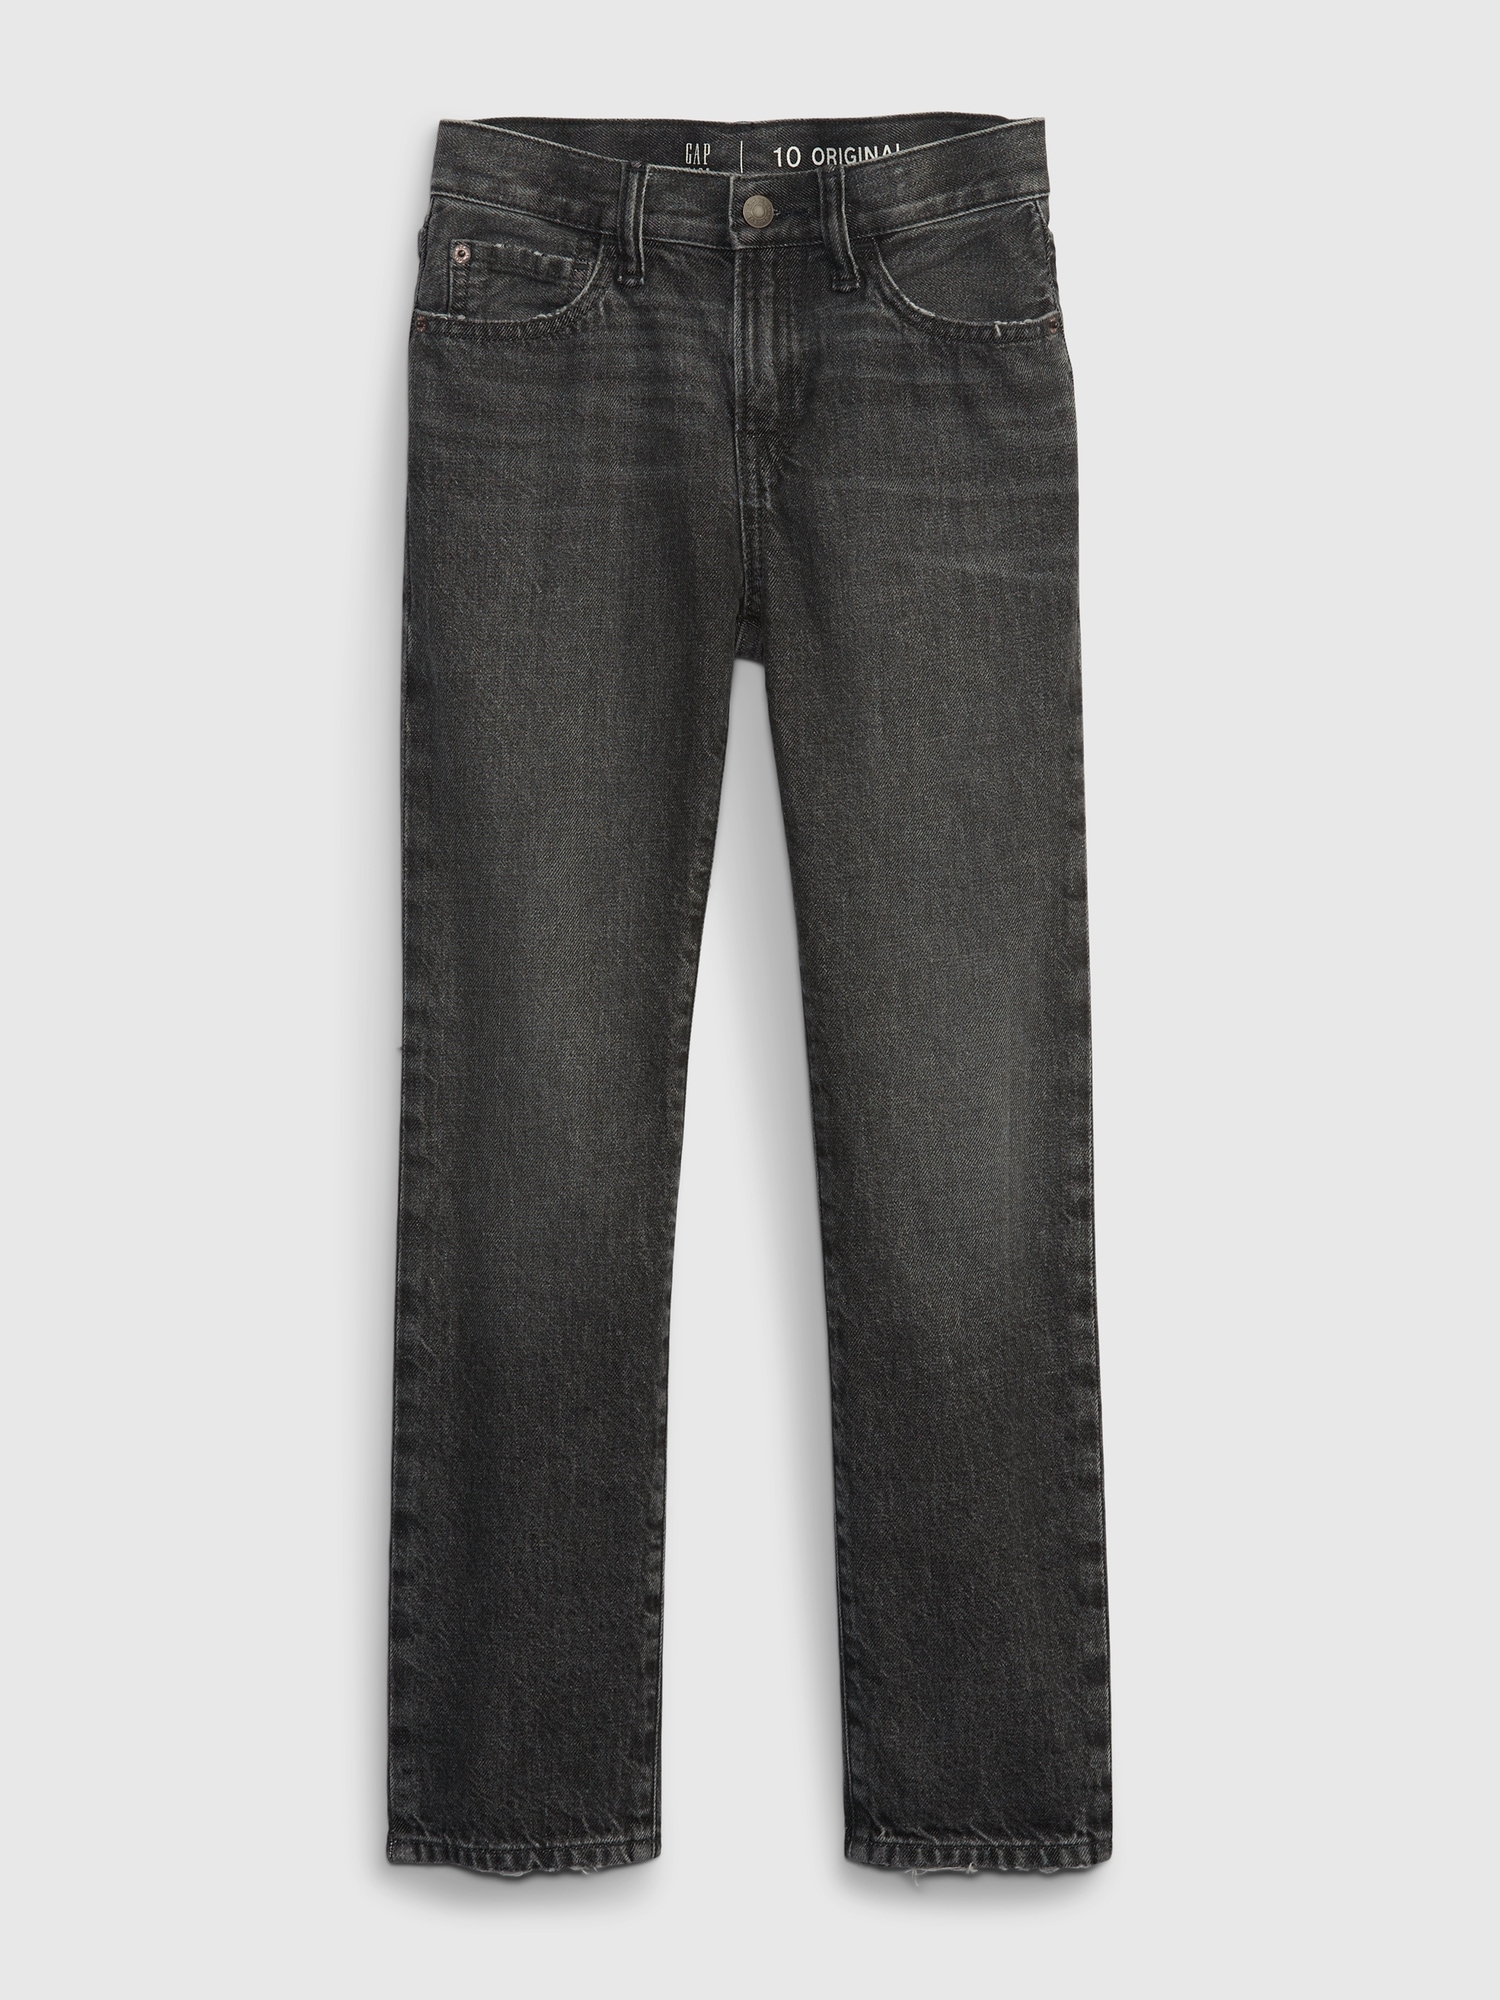 Gap Kids Original Straight Jeans with Washwell black. 1